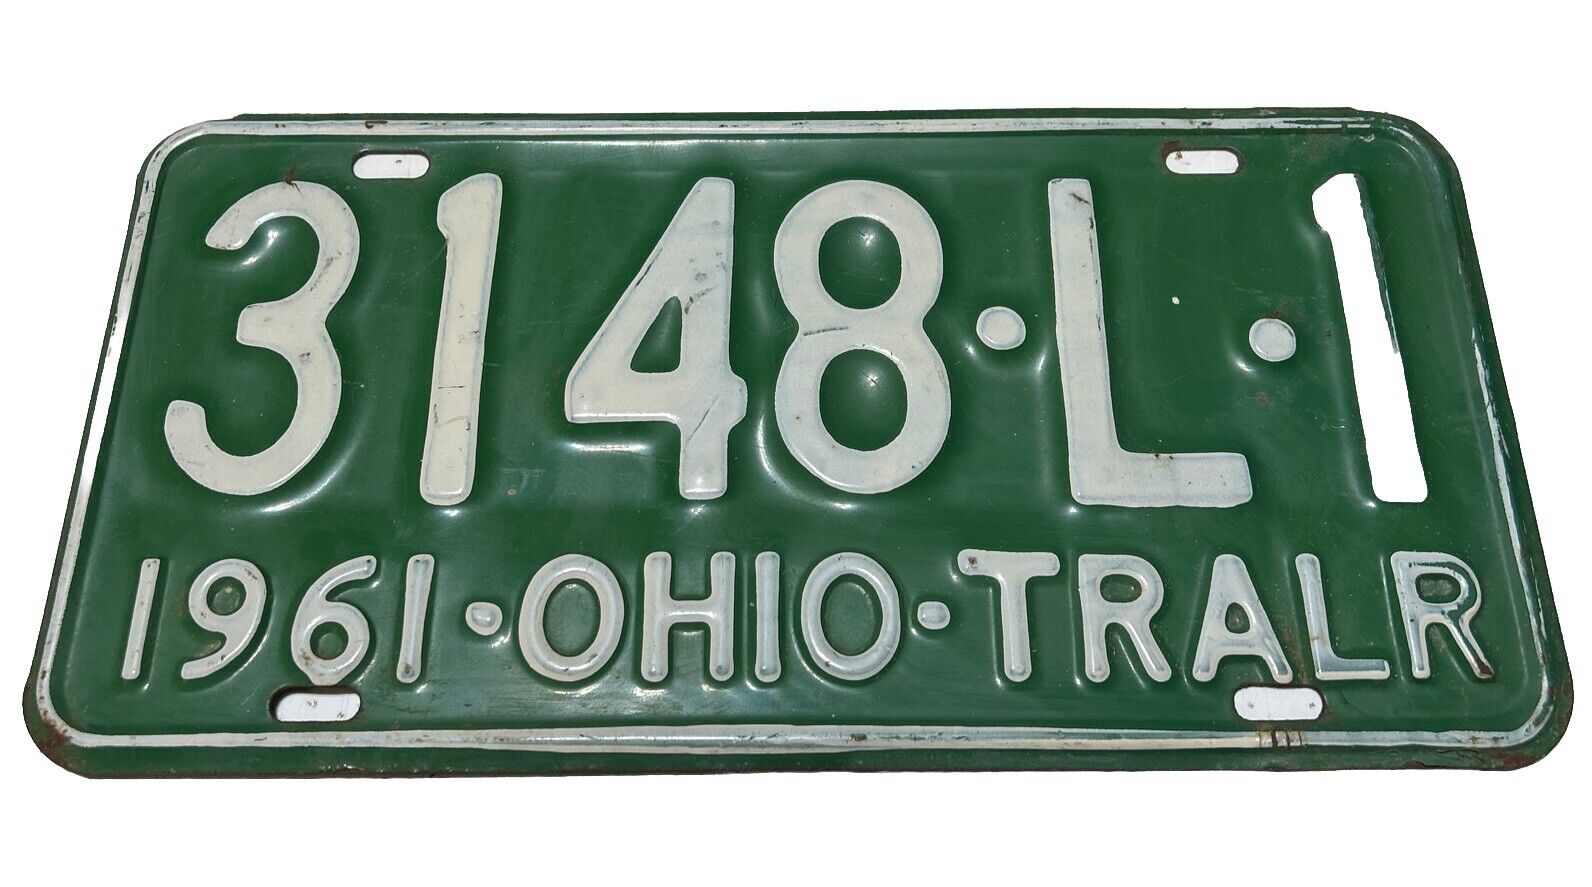 Vintage  1961 - Ohio Trailer License Plate - Original, Green,  Plate # 3148-L-1.